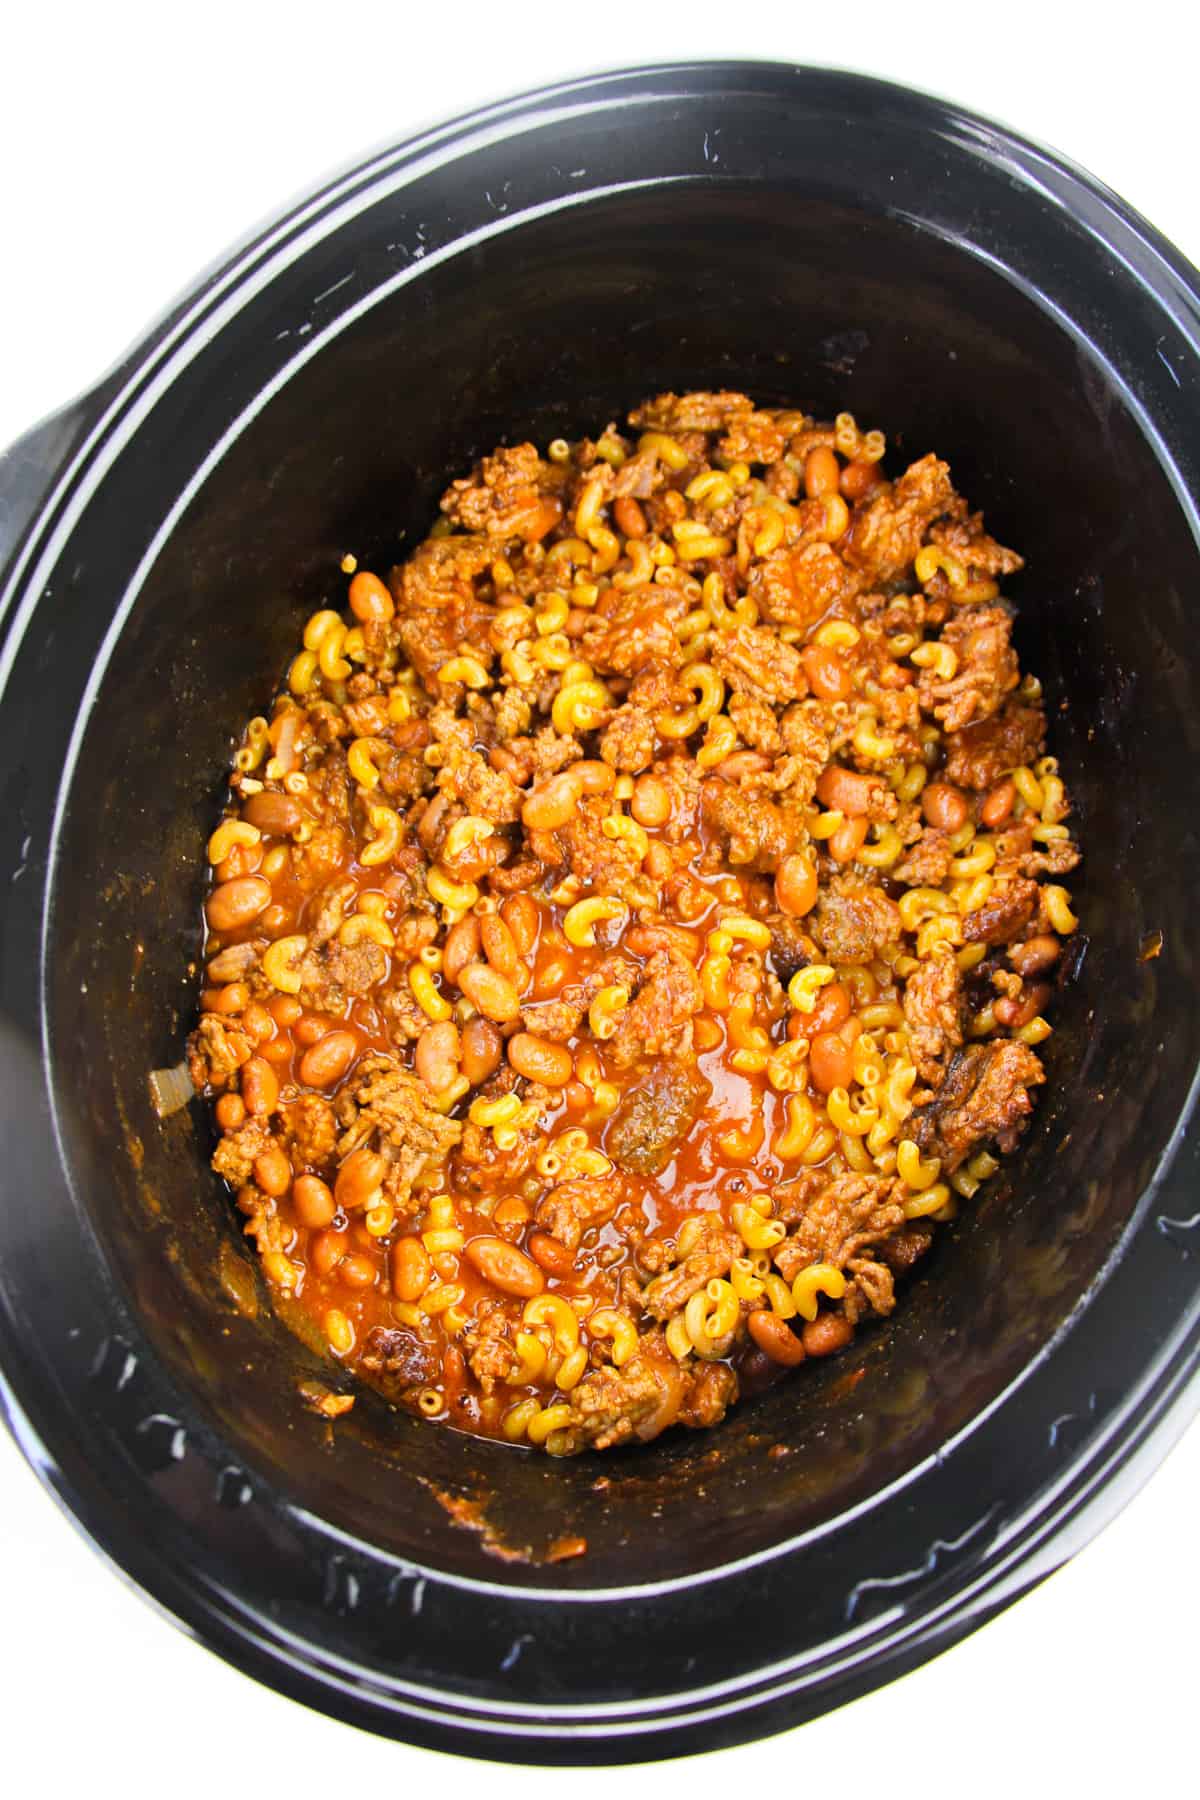 chili mac in crockpot